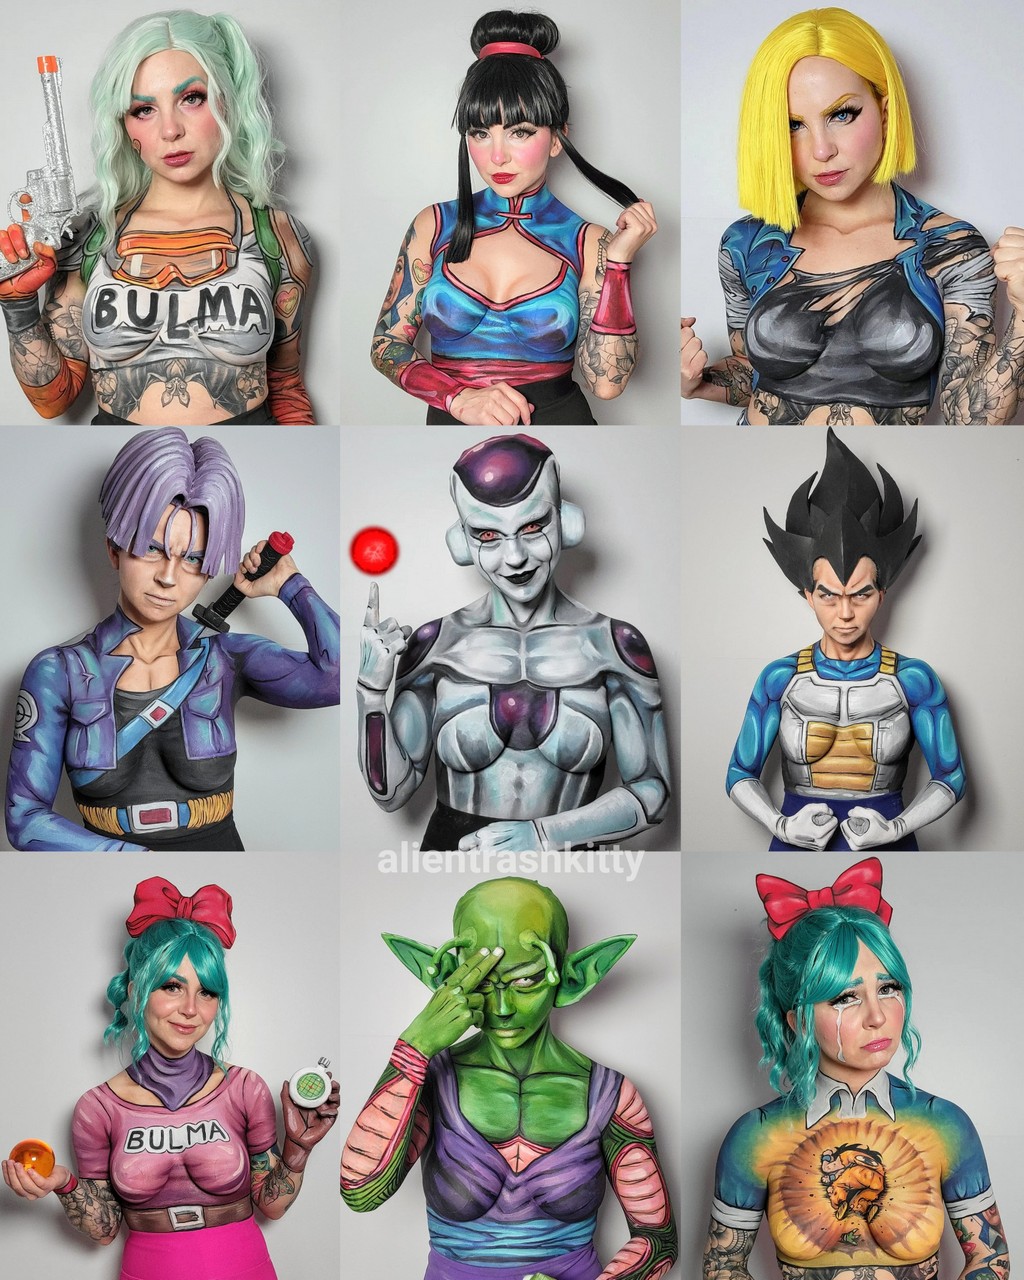 Dragon Ball Characters In Bodypaint Cosplay By Alientrashkitt